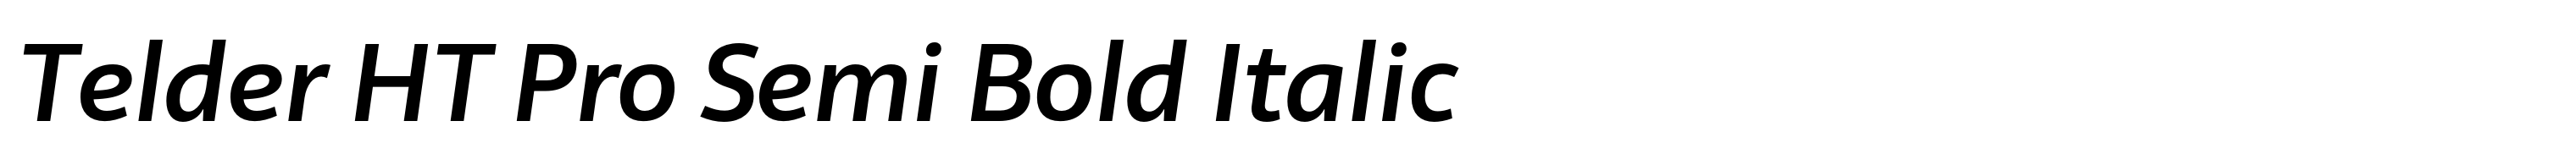 Telder HT Pro Semi Bold Italic